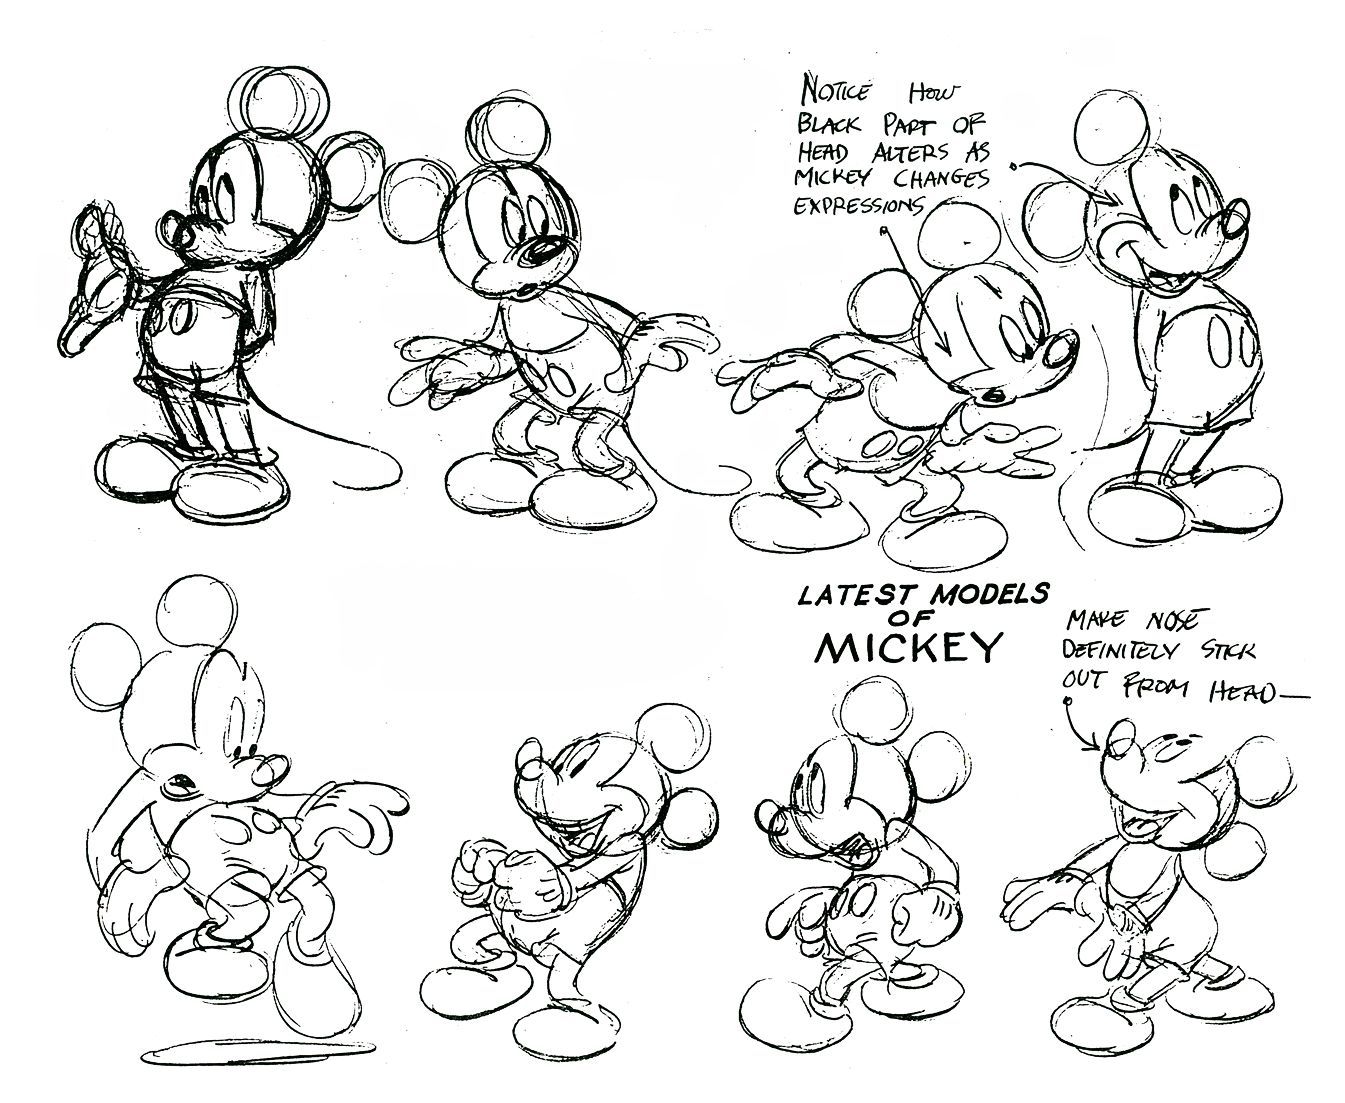 http://www.oasidelleanime.com/minisiti/disney/topolino/model-topolino/original1/Mickey_Mouse_model_sheets002.jpg